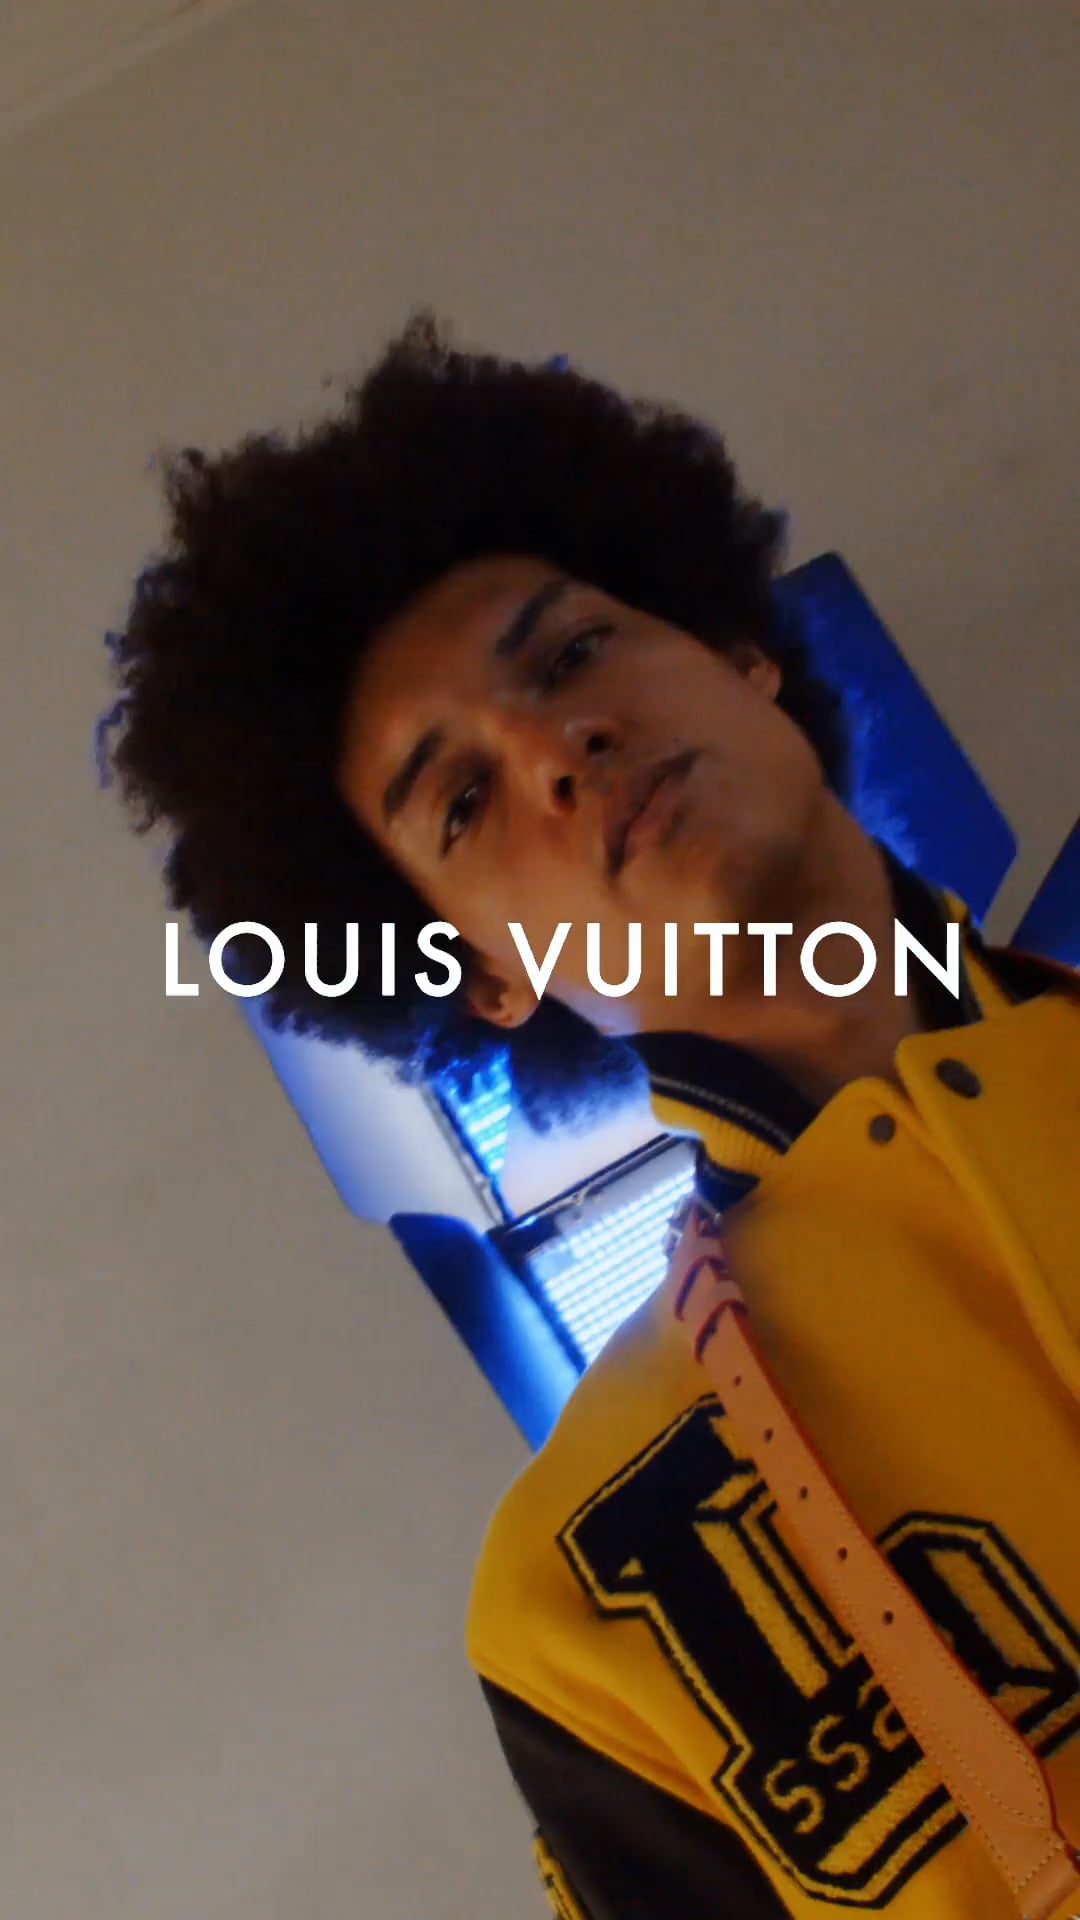 Louis Vuitton Runway 2021 by Virgil Abloh on Vimeo